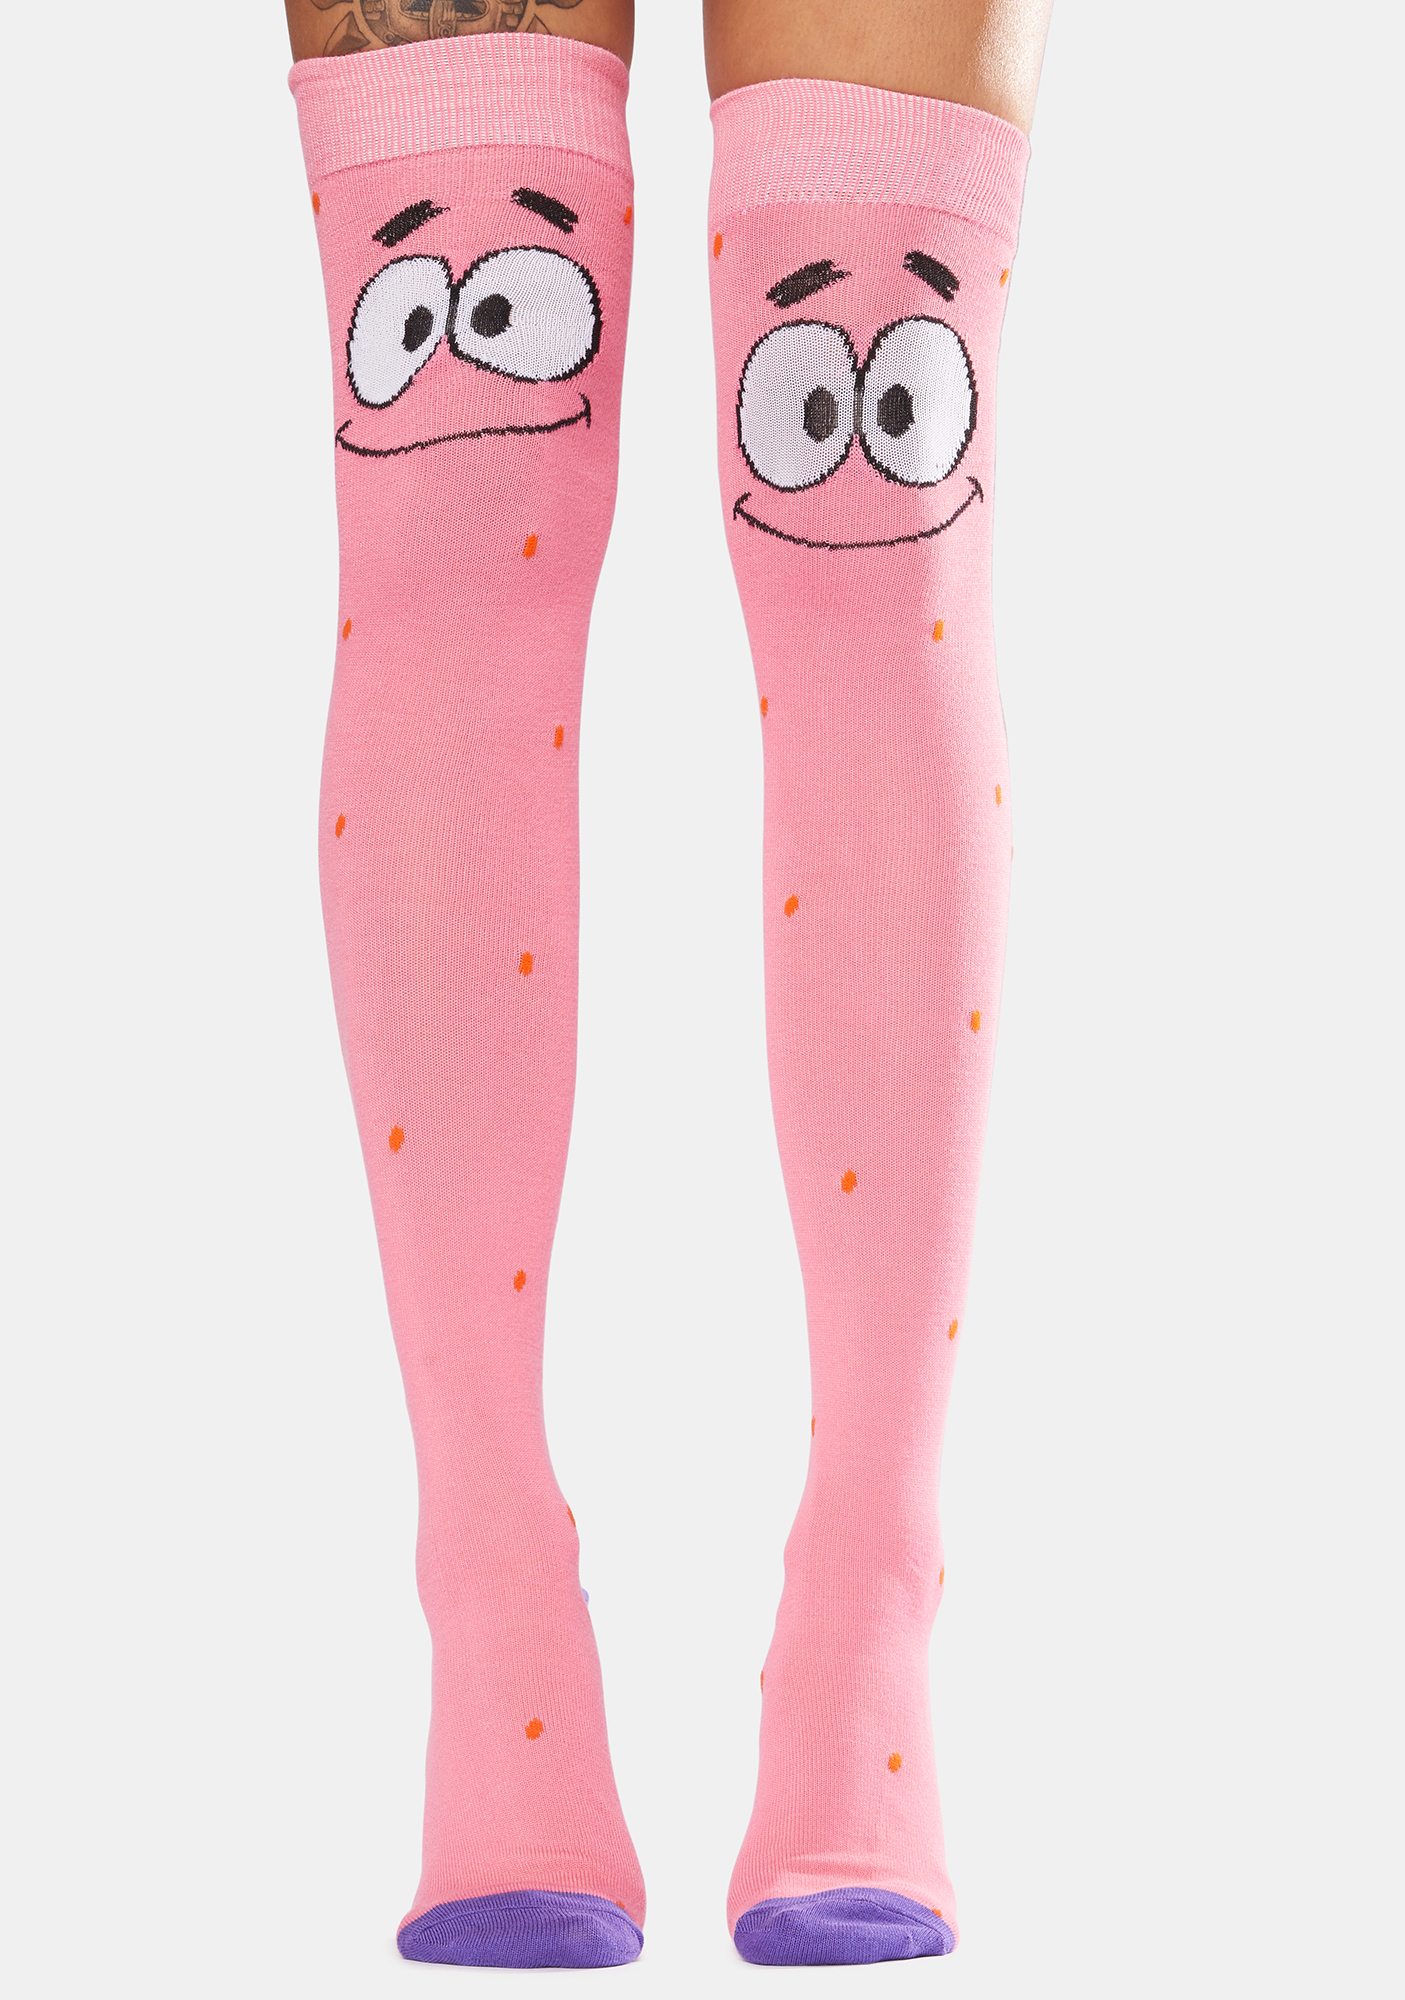 Spongebob Patrick Over The Knee Socks Pink Dolls Kill